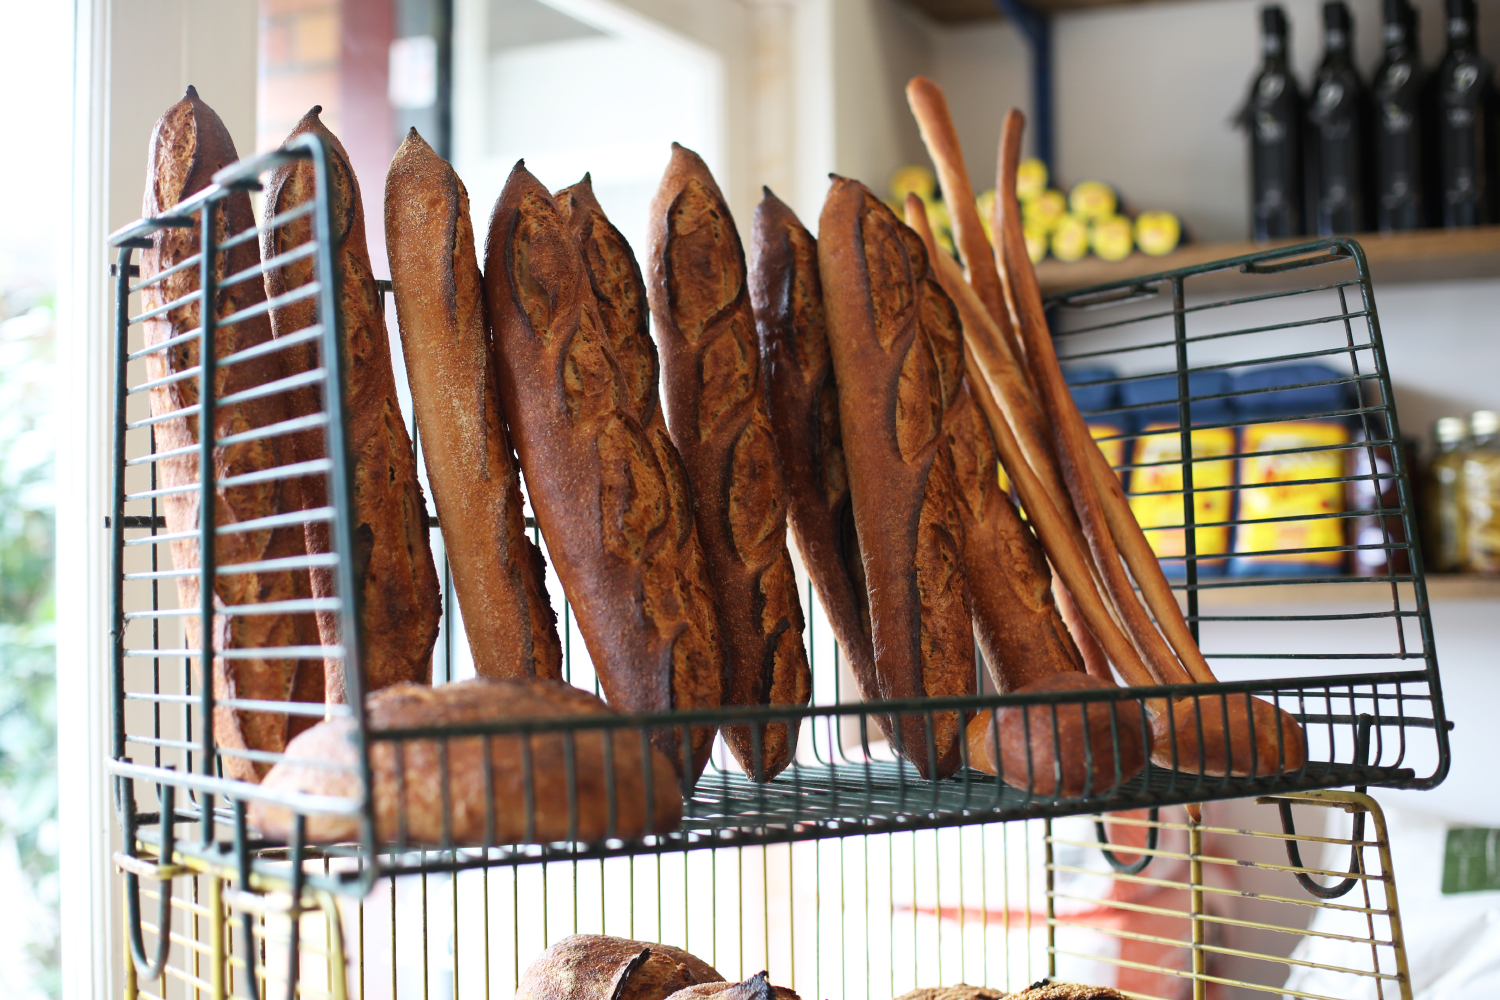 Lonzo's selection of bread in their london fields shop